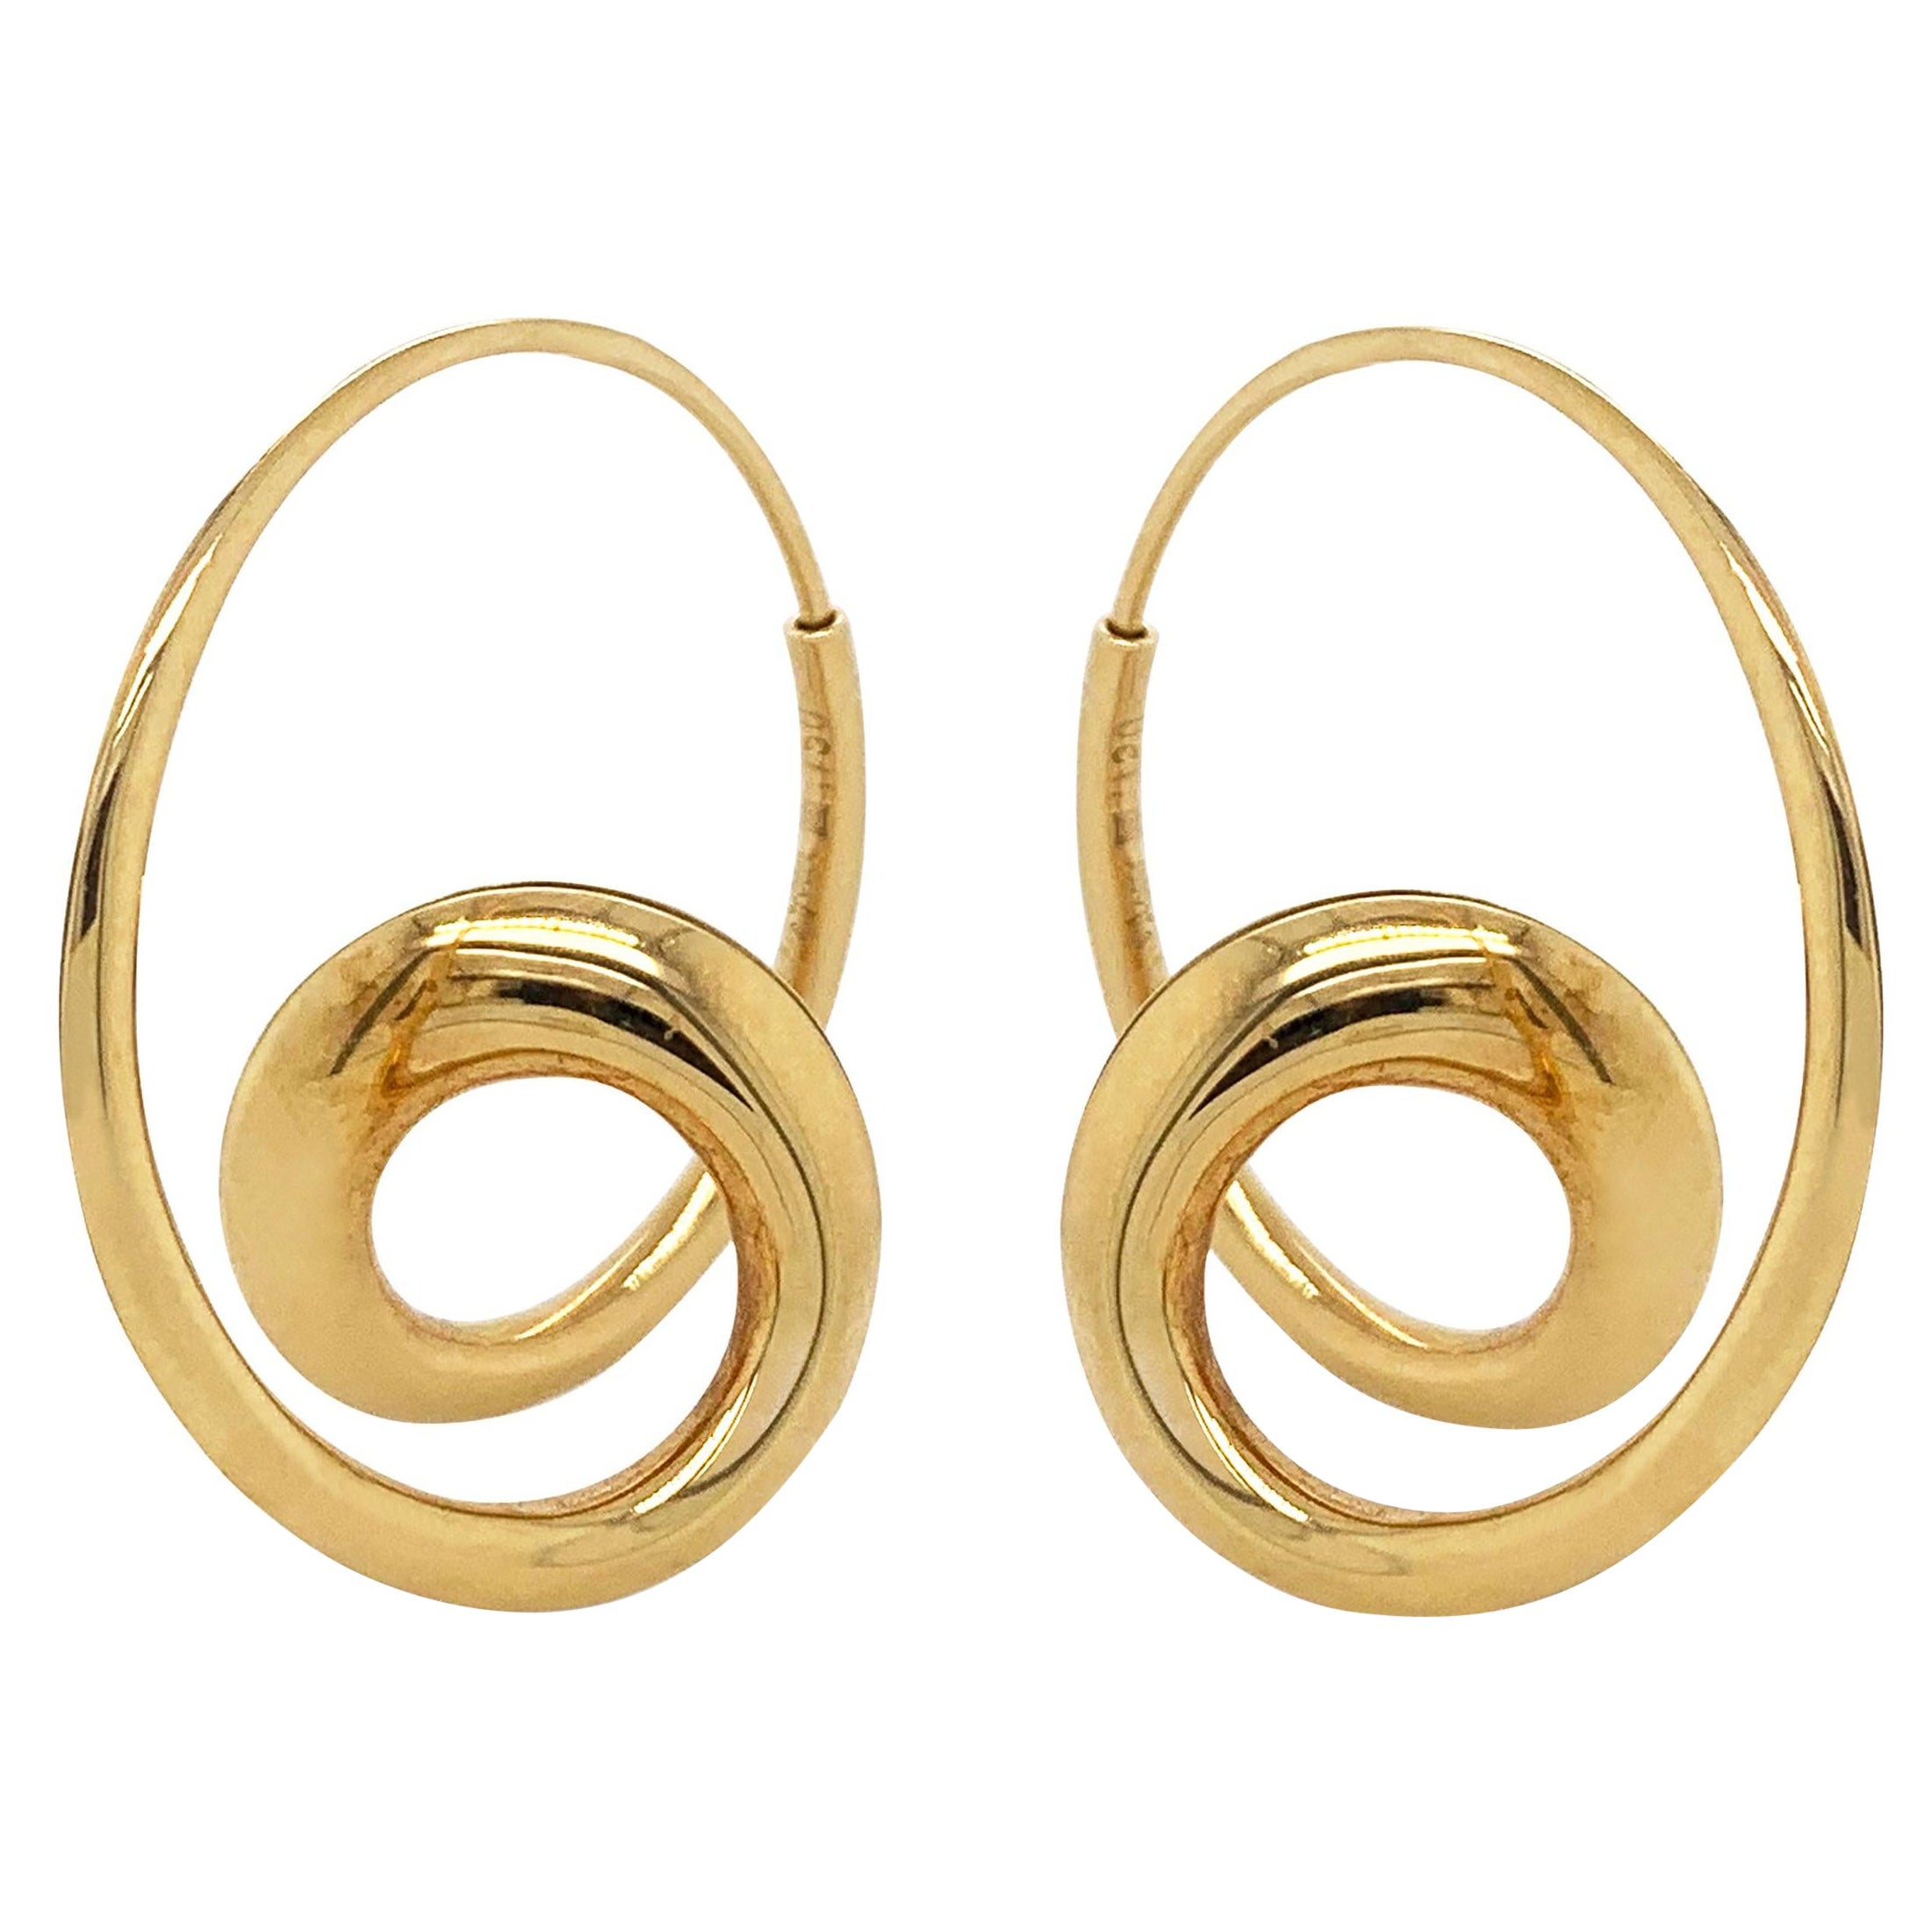 Michael Good Baroque Twisted Hoop Earrings in 18k Yellow Gold